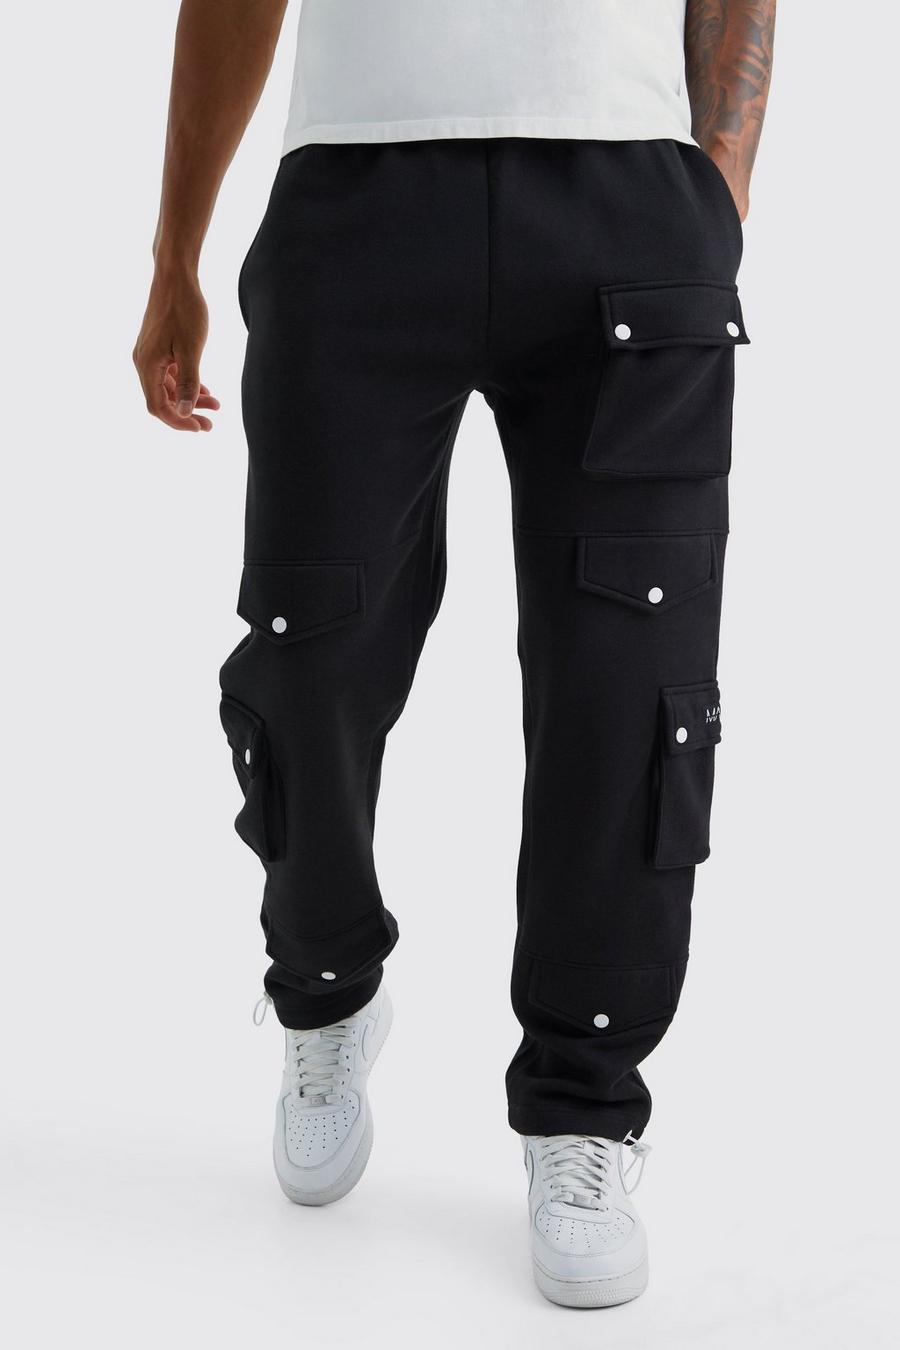 Pantalón deportivo Tall con multibolsillos cargo y botamanga, Black